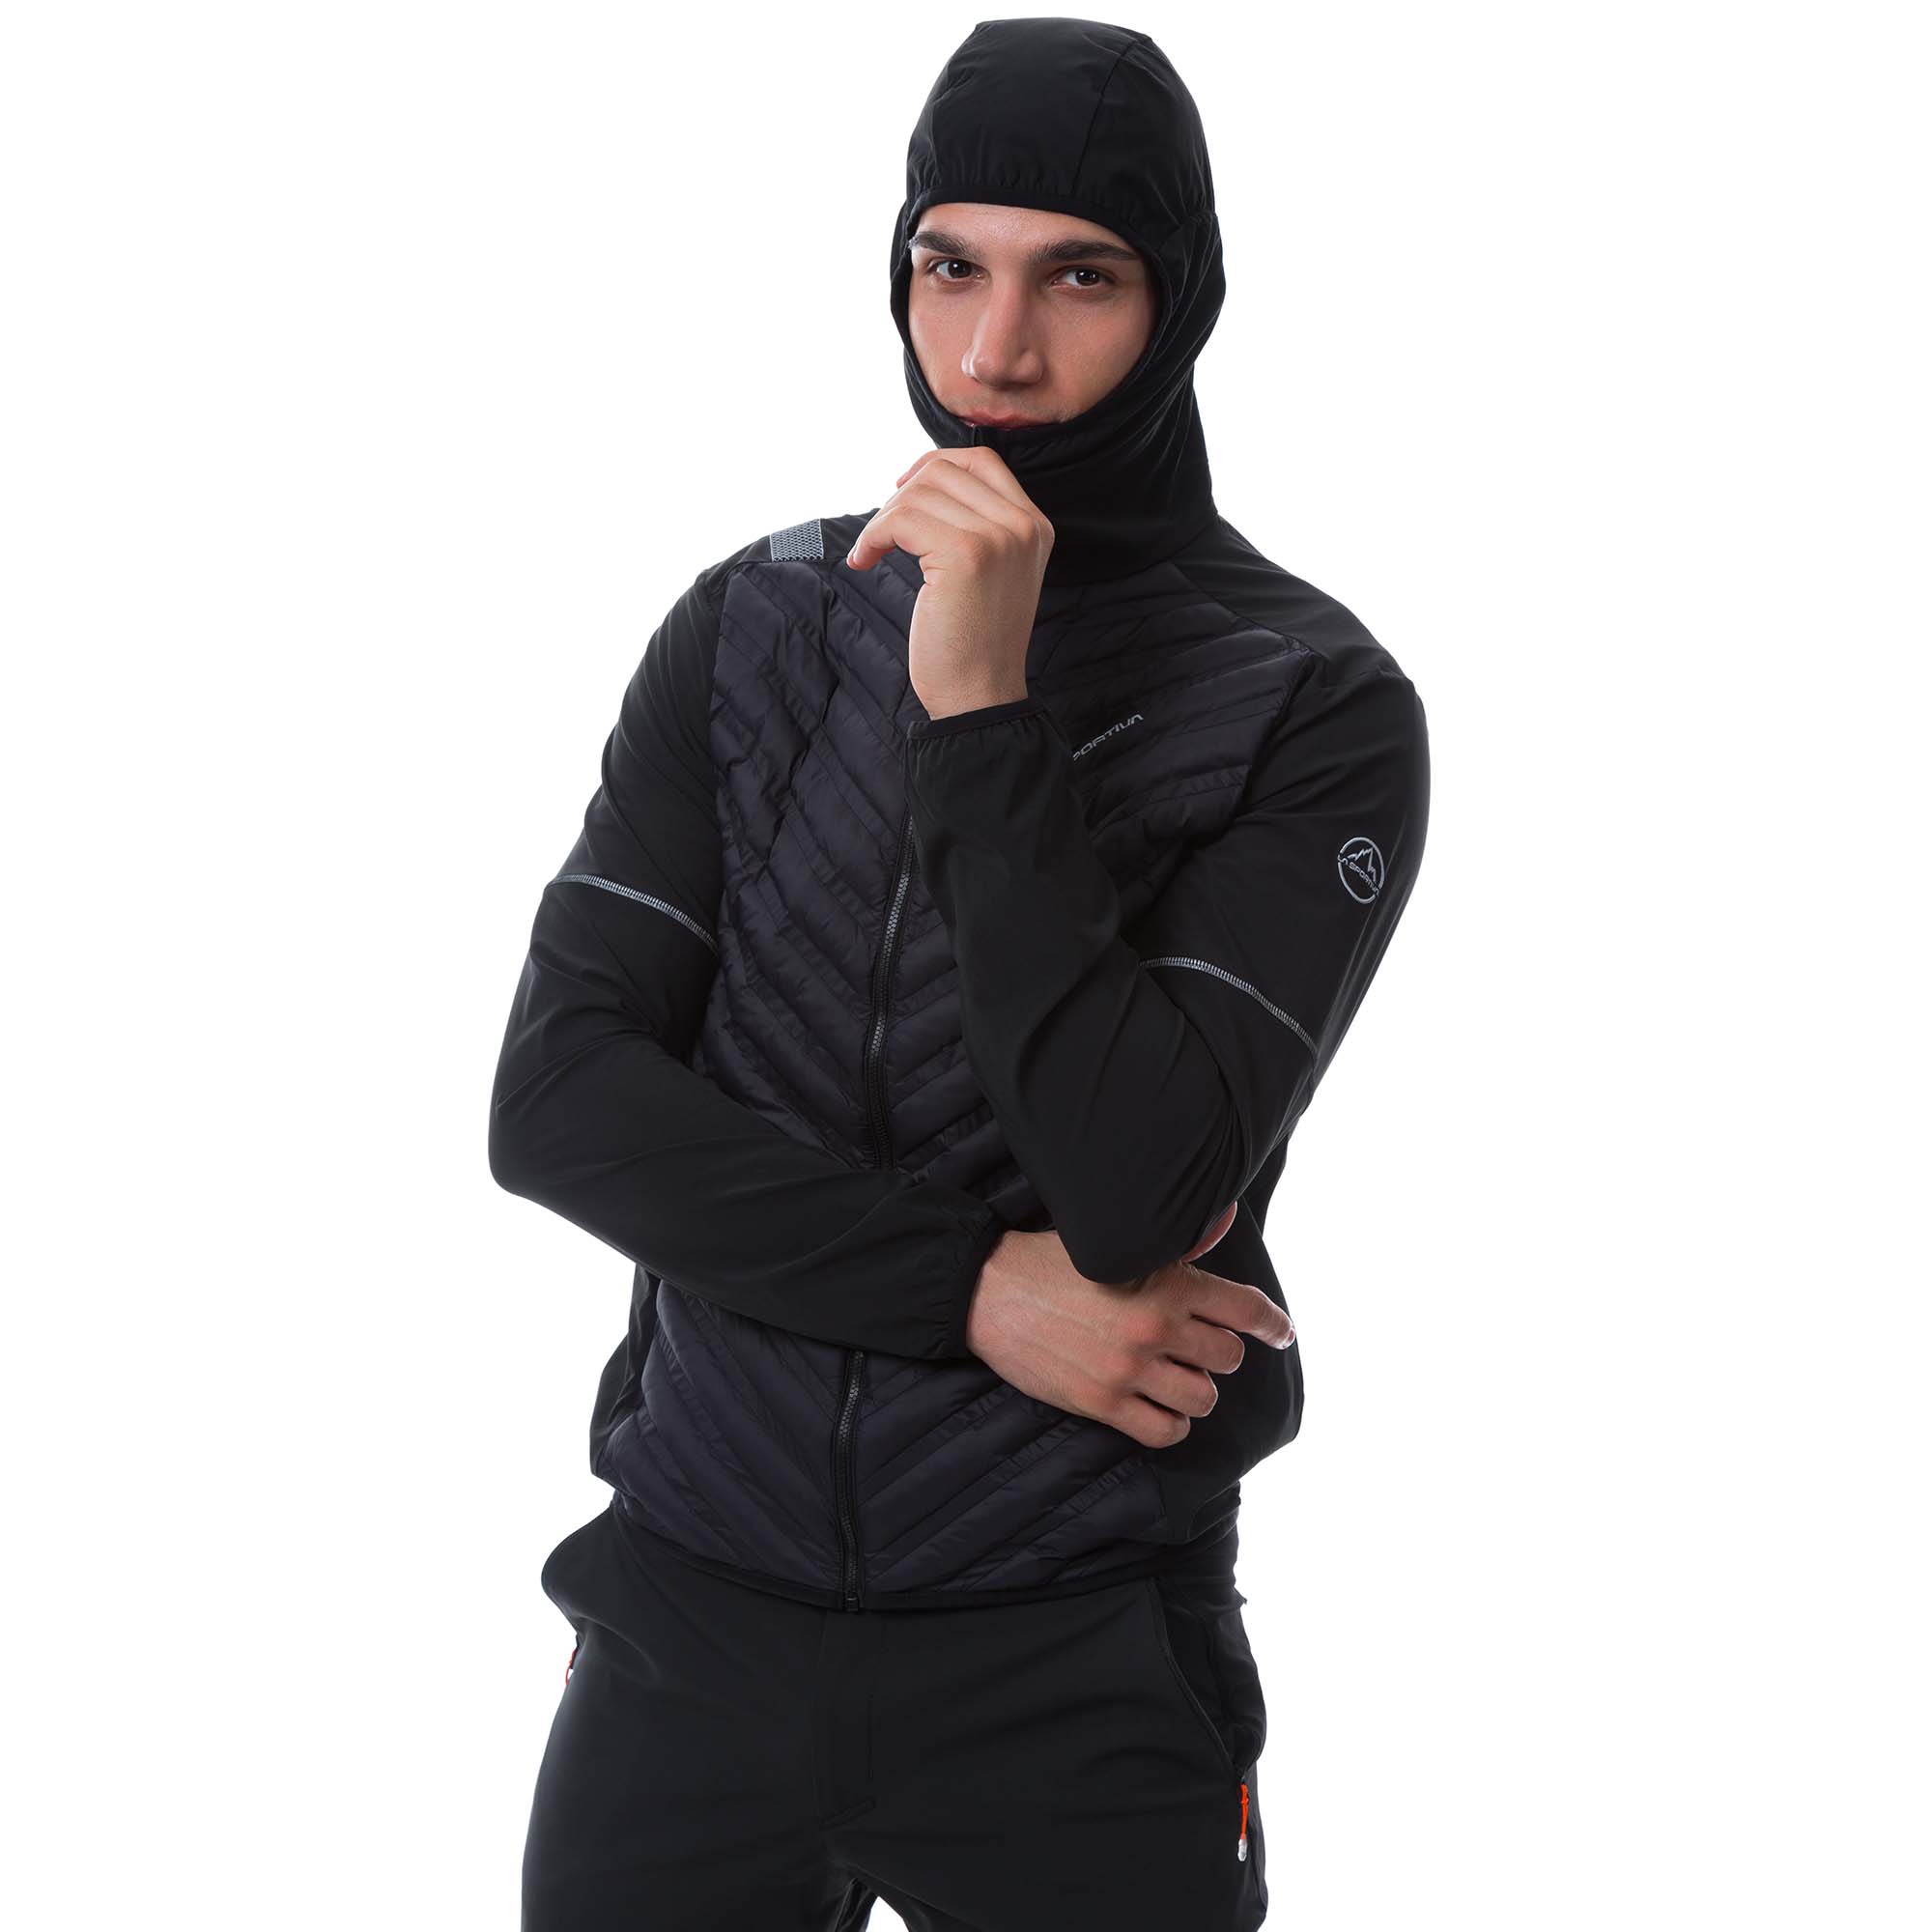 La Sportiva Koro Insulated Runner Jacket 